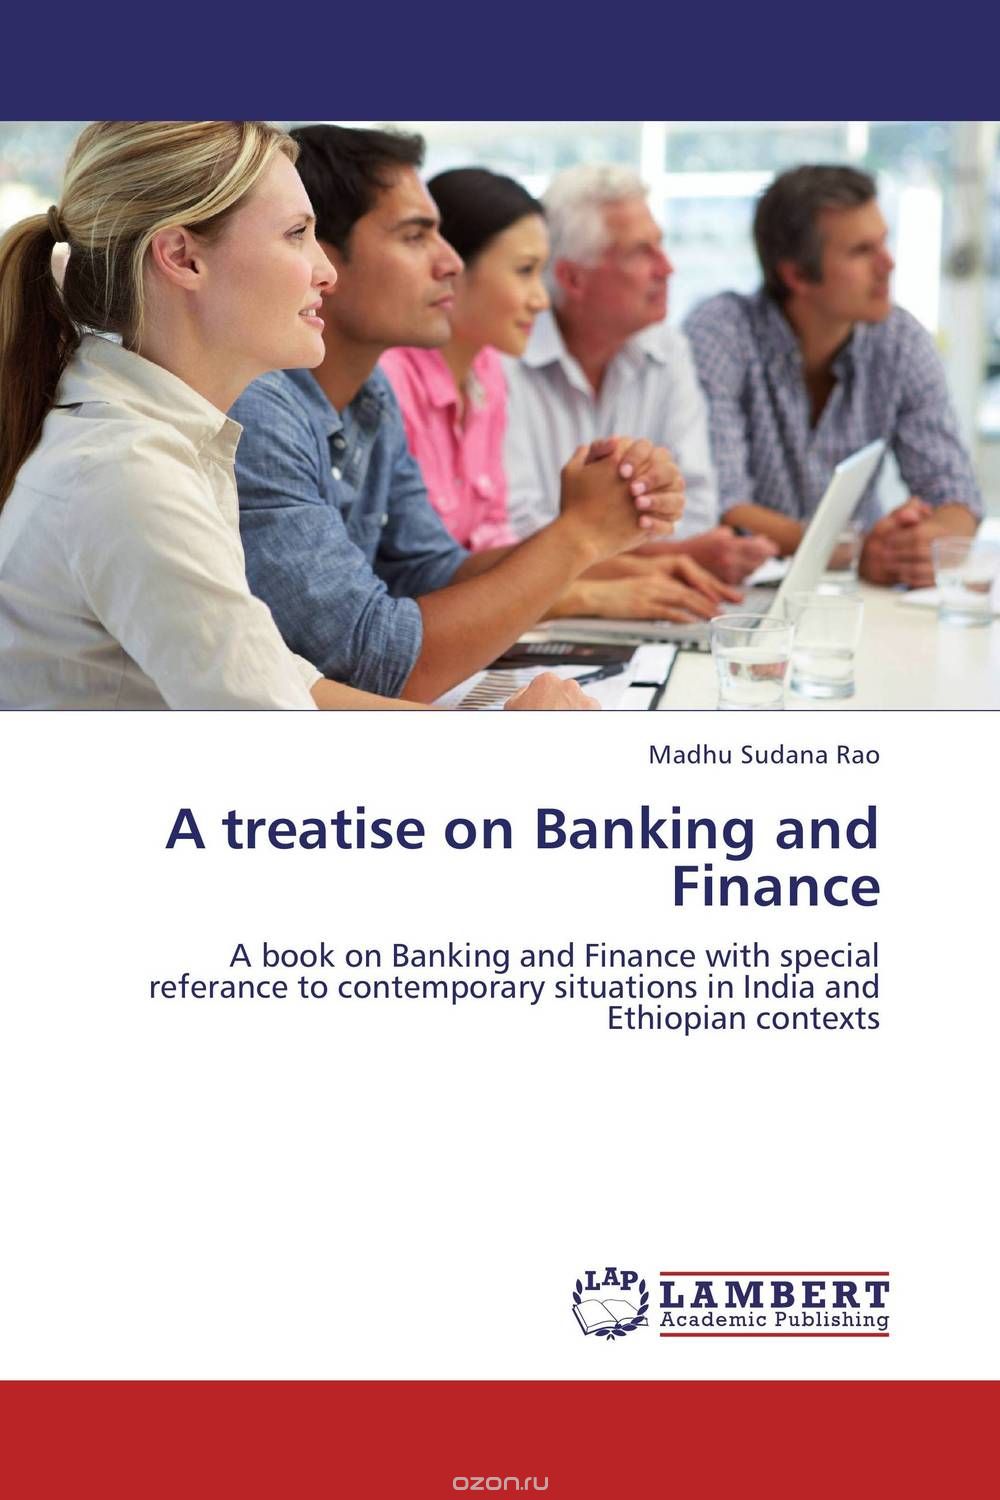 Скачать книгу "A treatise on Banking and Finance"